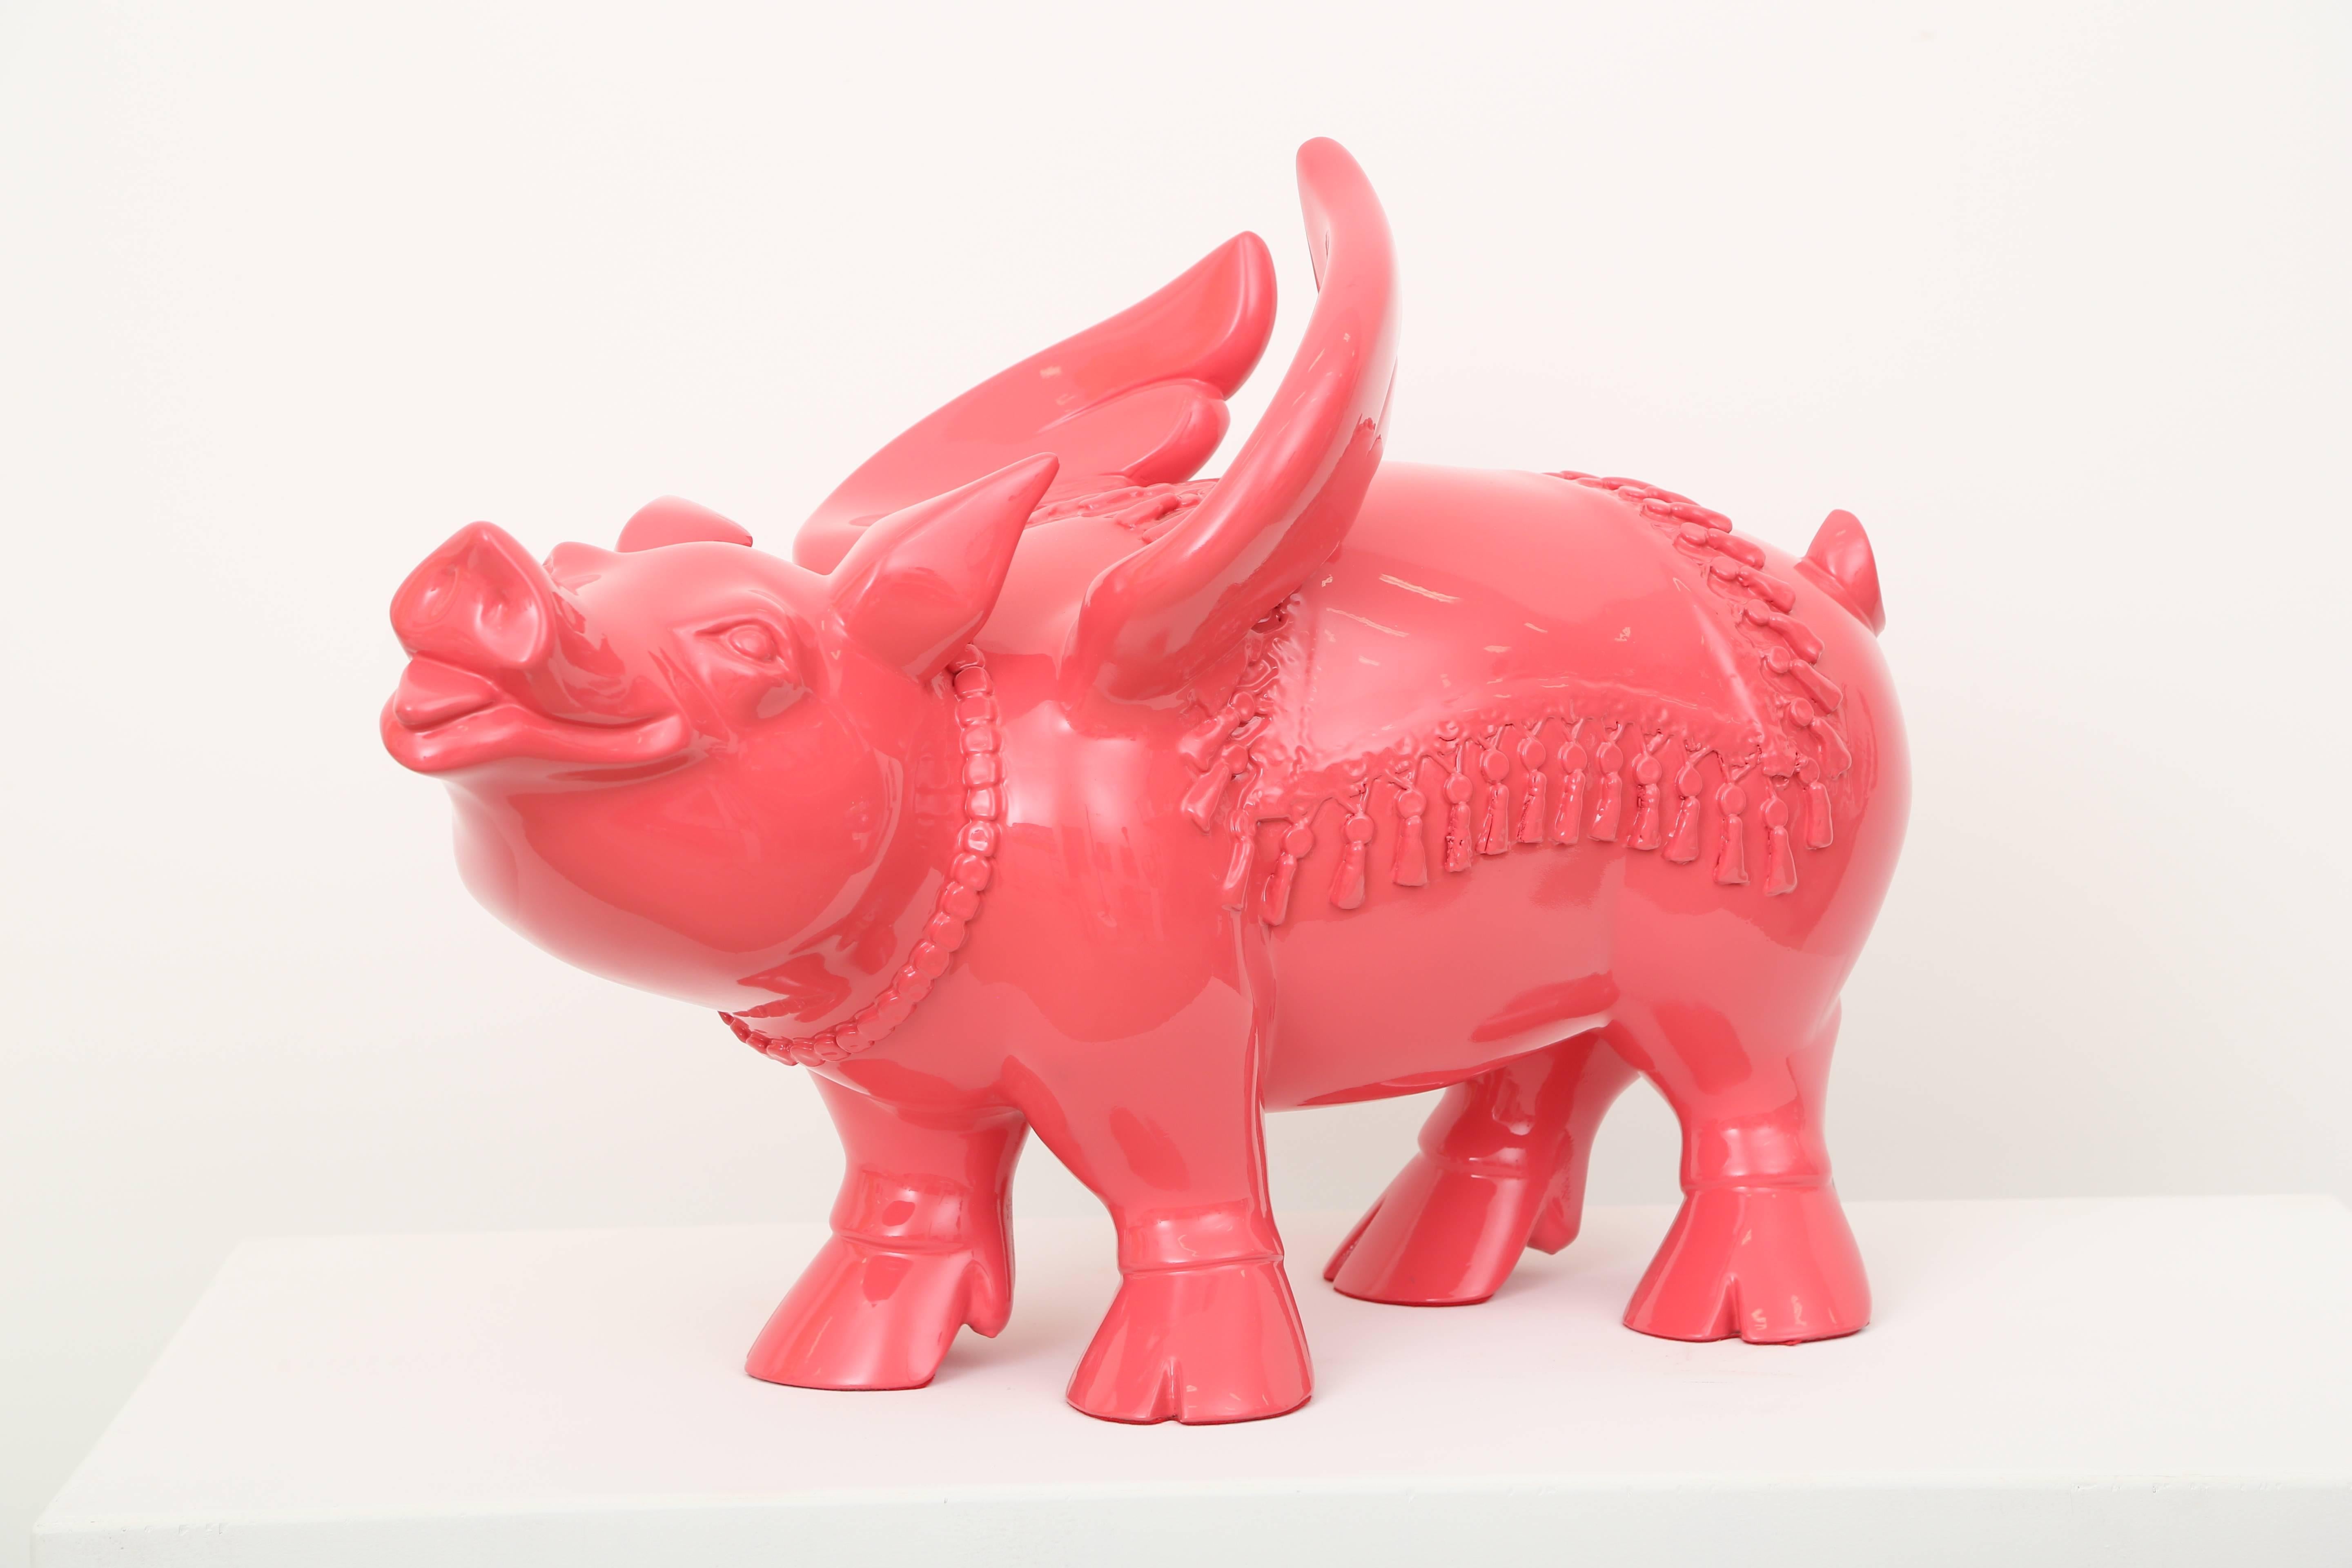 Pigasus - Pink Pig Resin Sculpture - White Figurative Sculpture by Patrick Schumacher